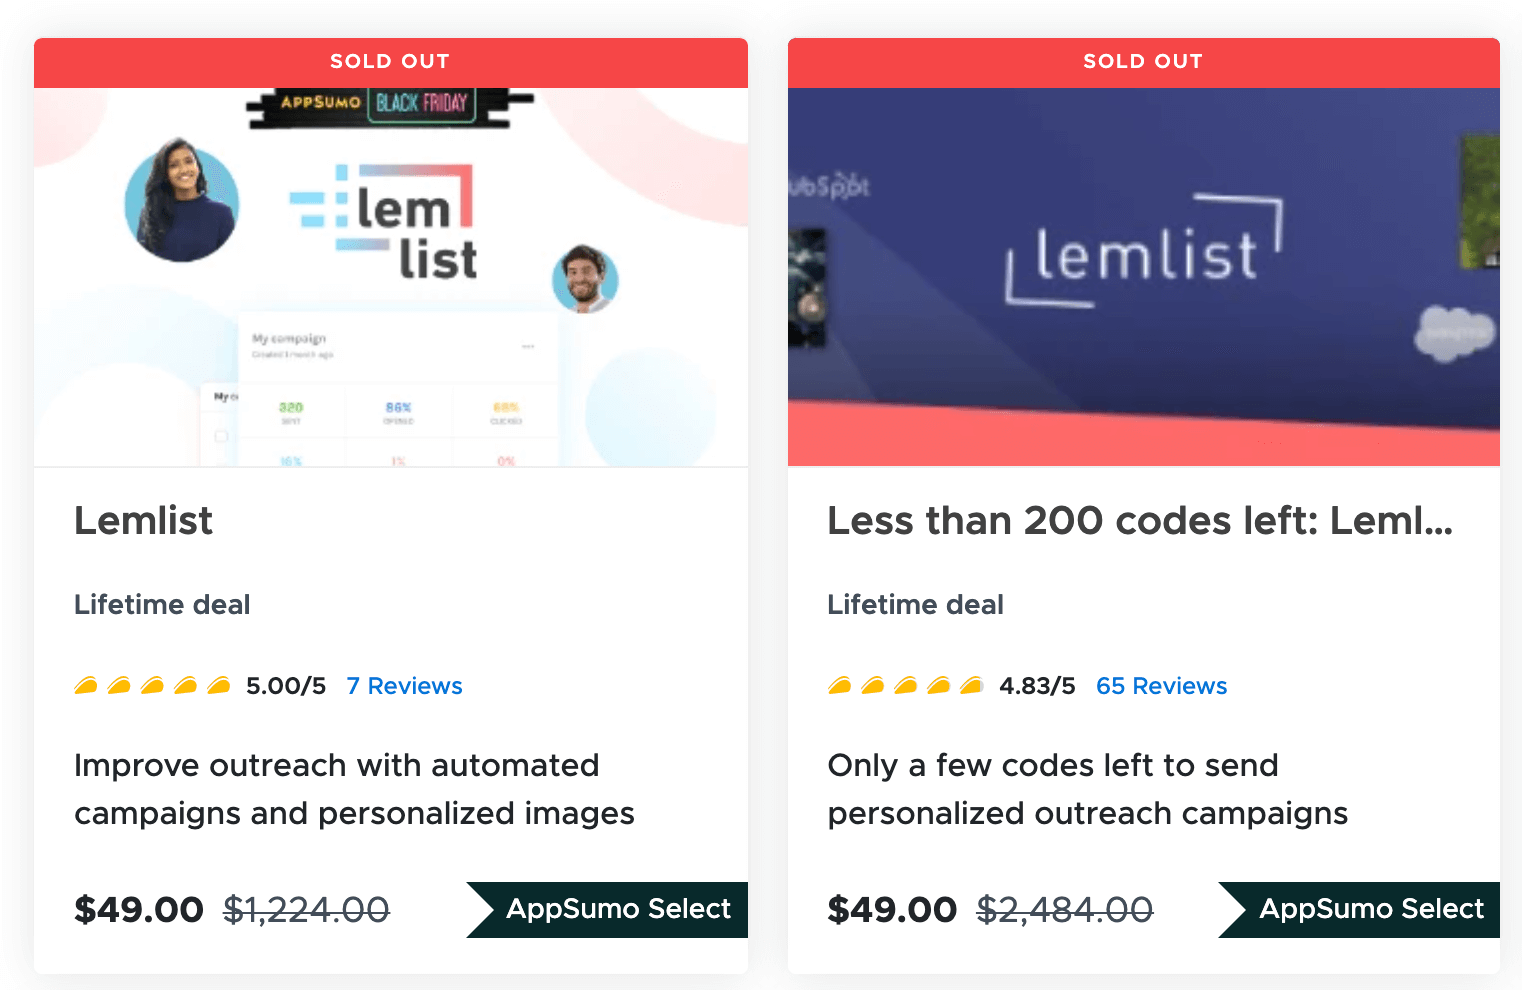 Lemlist Launch on Appsumo